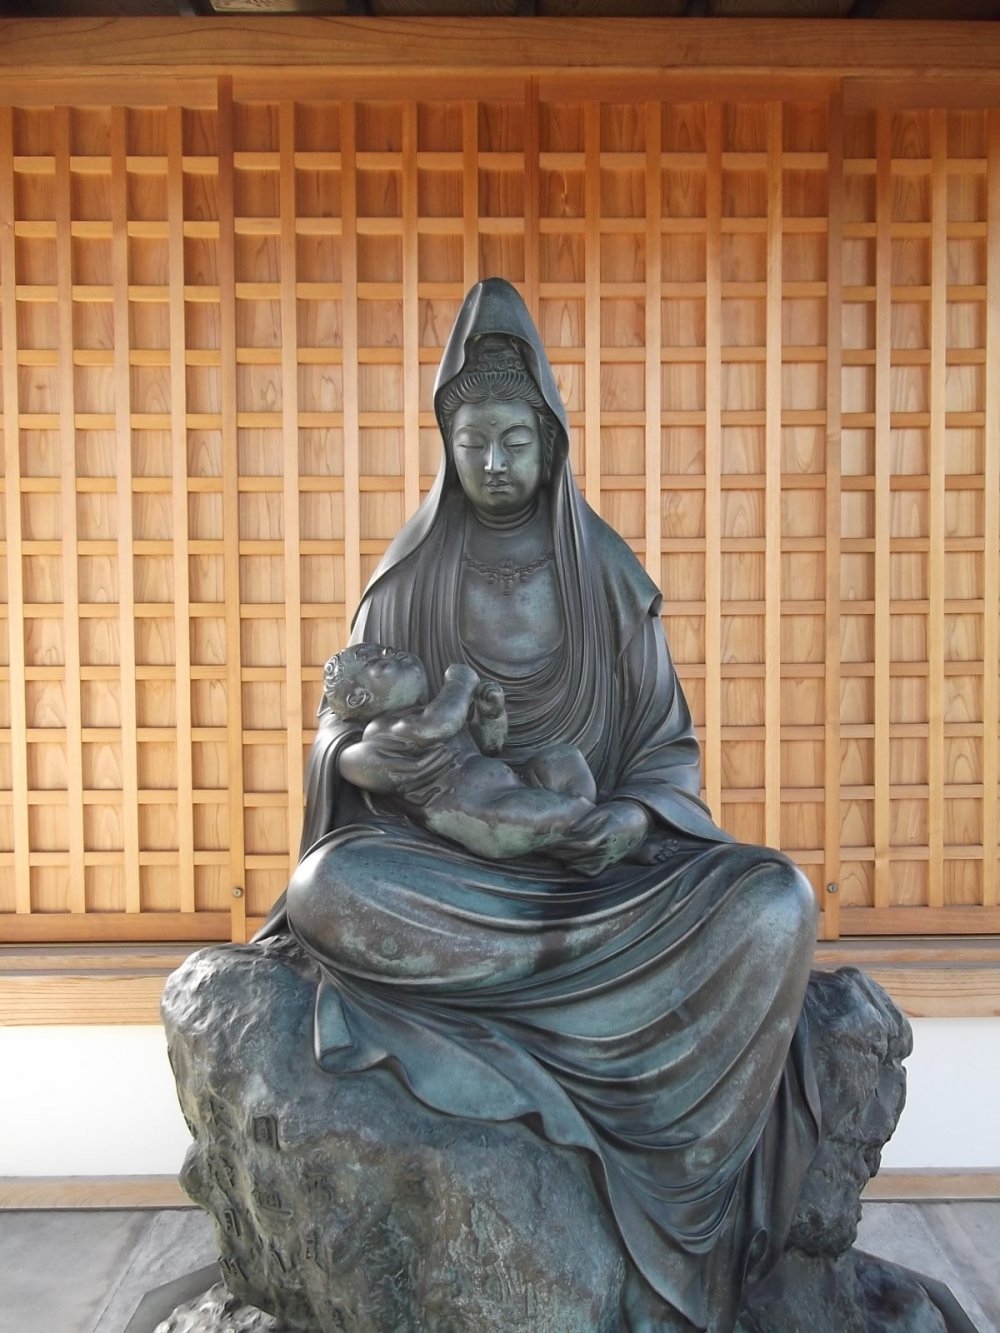 Sebuah patung Budha di dekat pintu gerbang